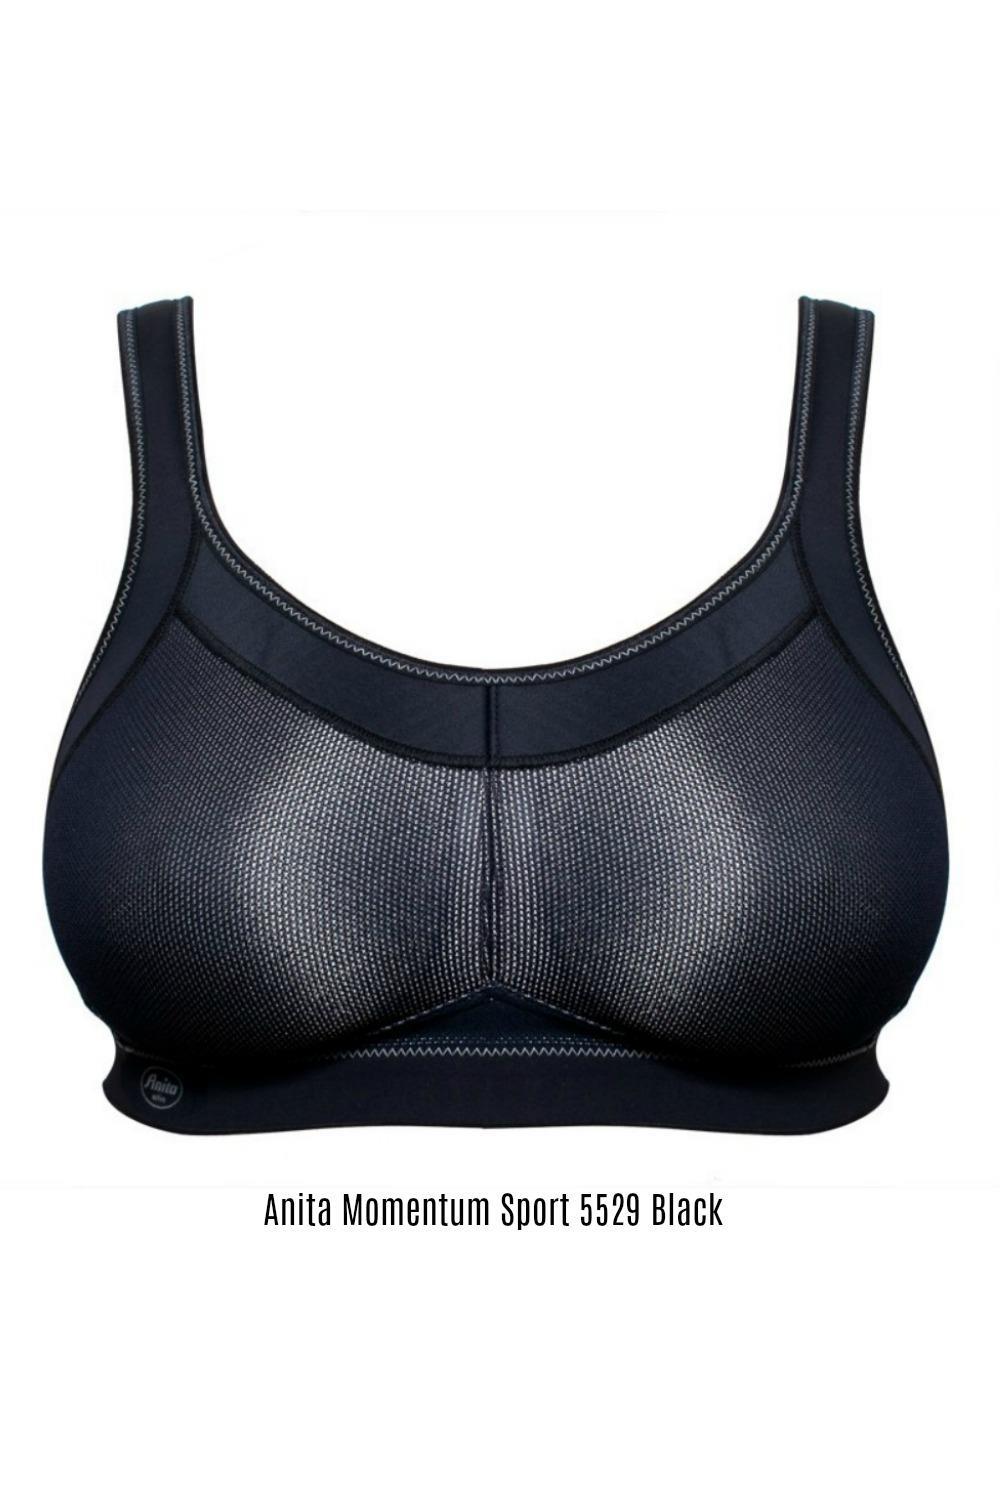 Anita Max Support Momentum Sports Bra 5529 Black – My Top Drawer